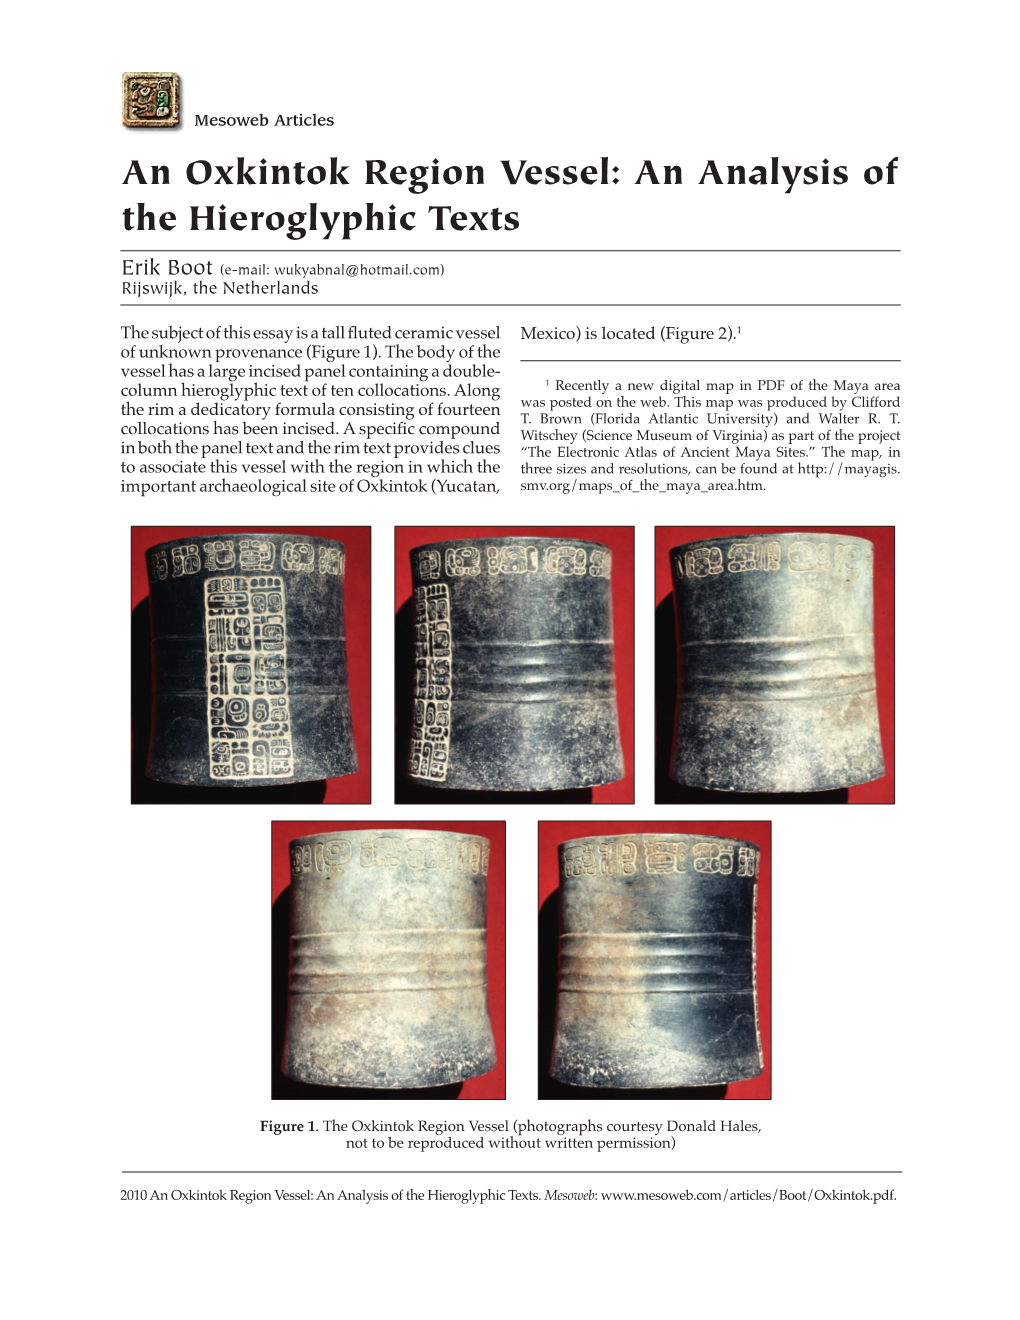 An Oxkintok Region Vessel: an Analysis of the Hieroglyphic Texts